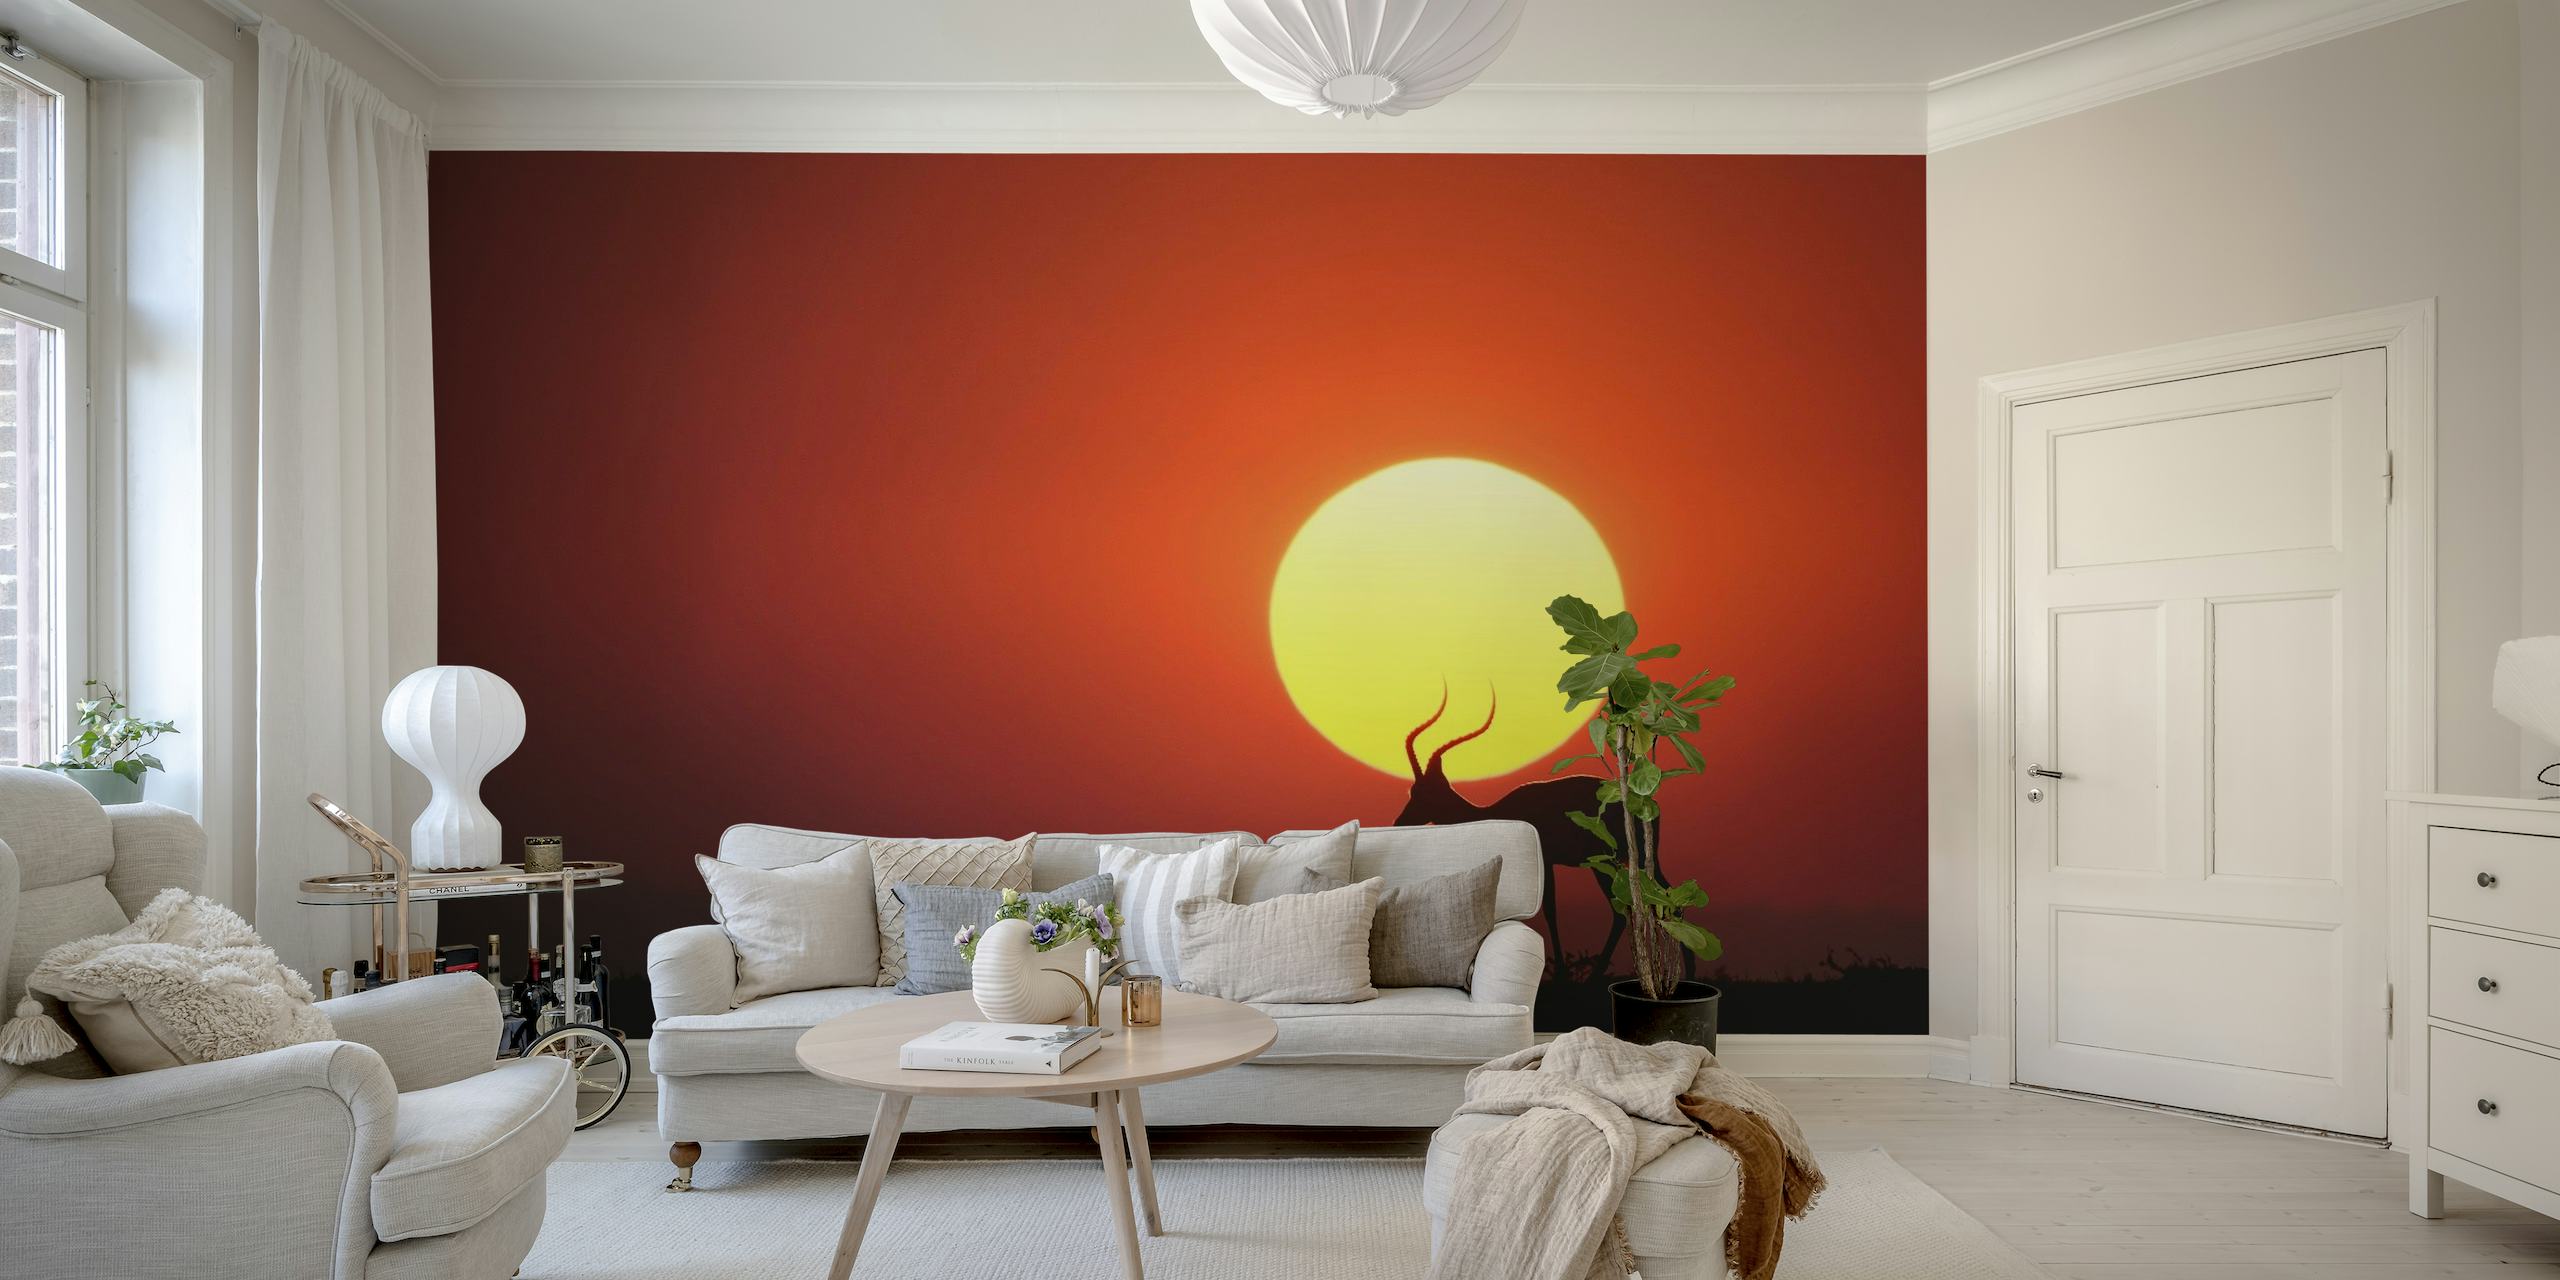 An African Sunset tapetit